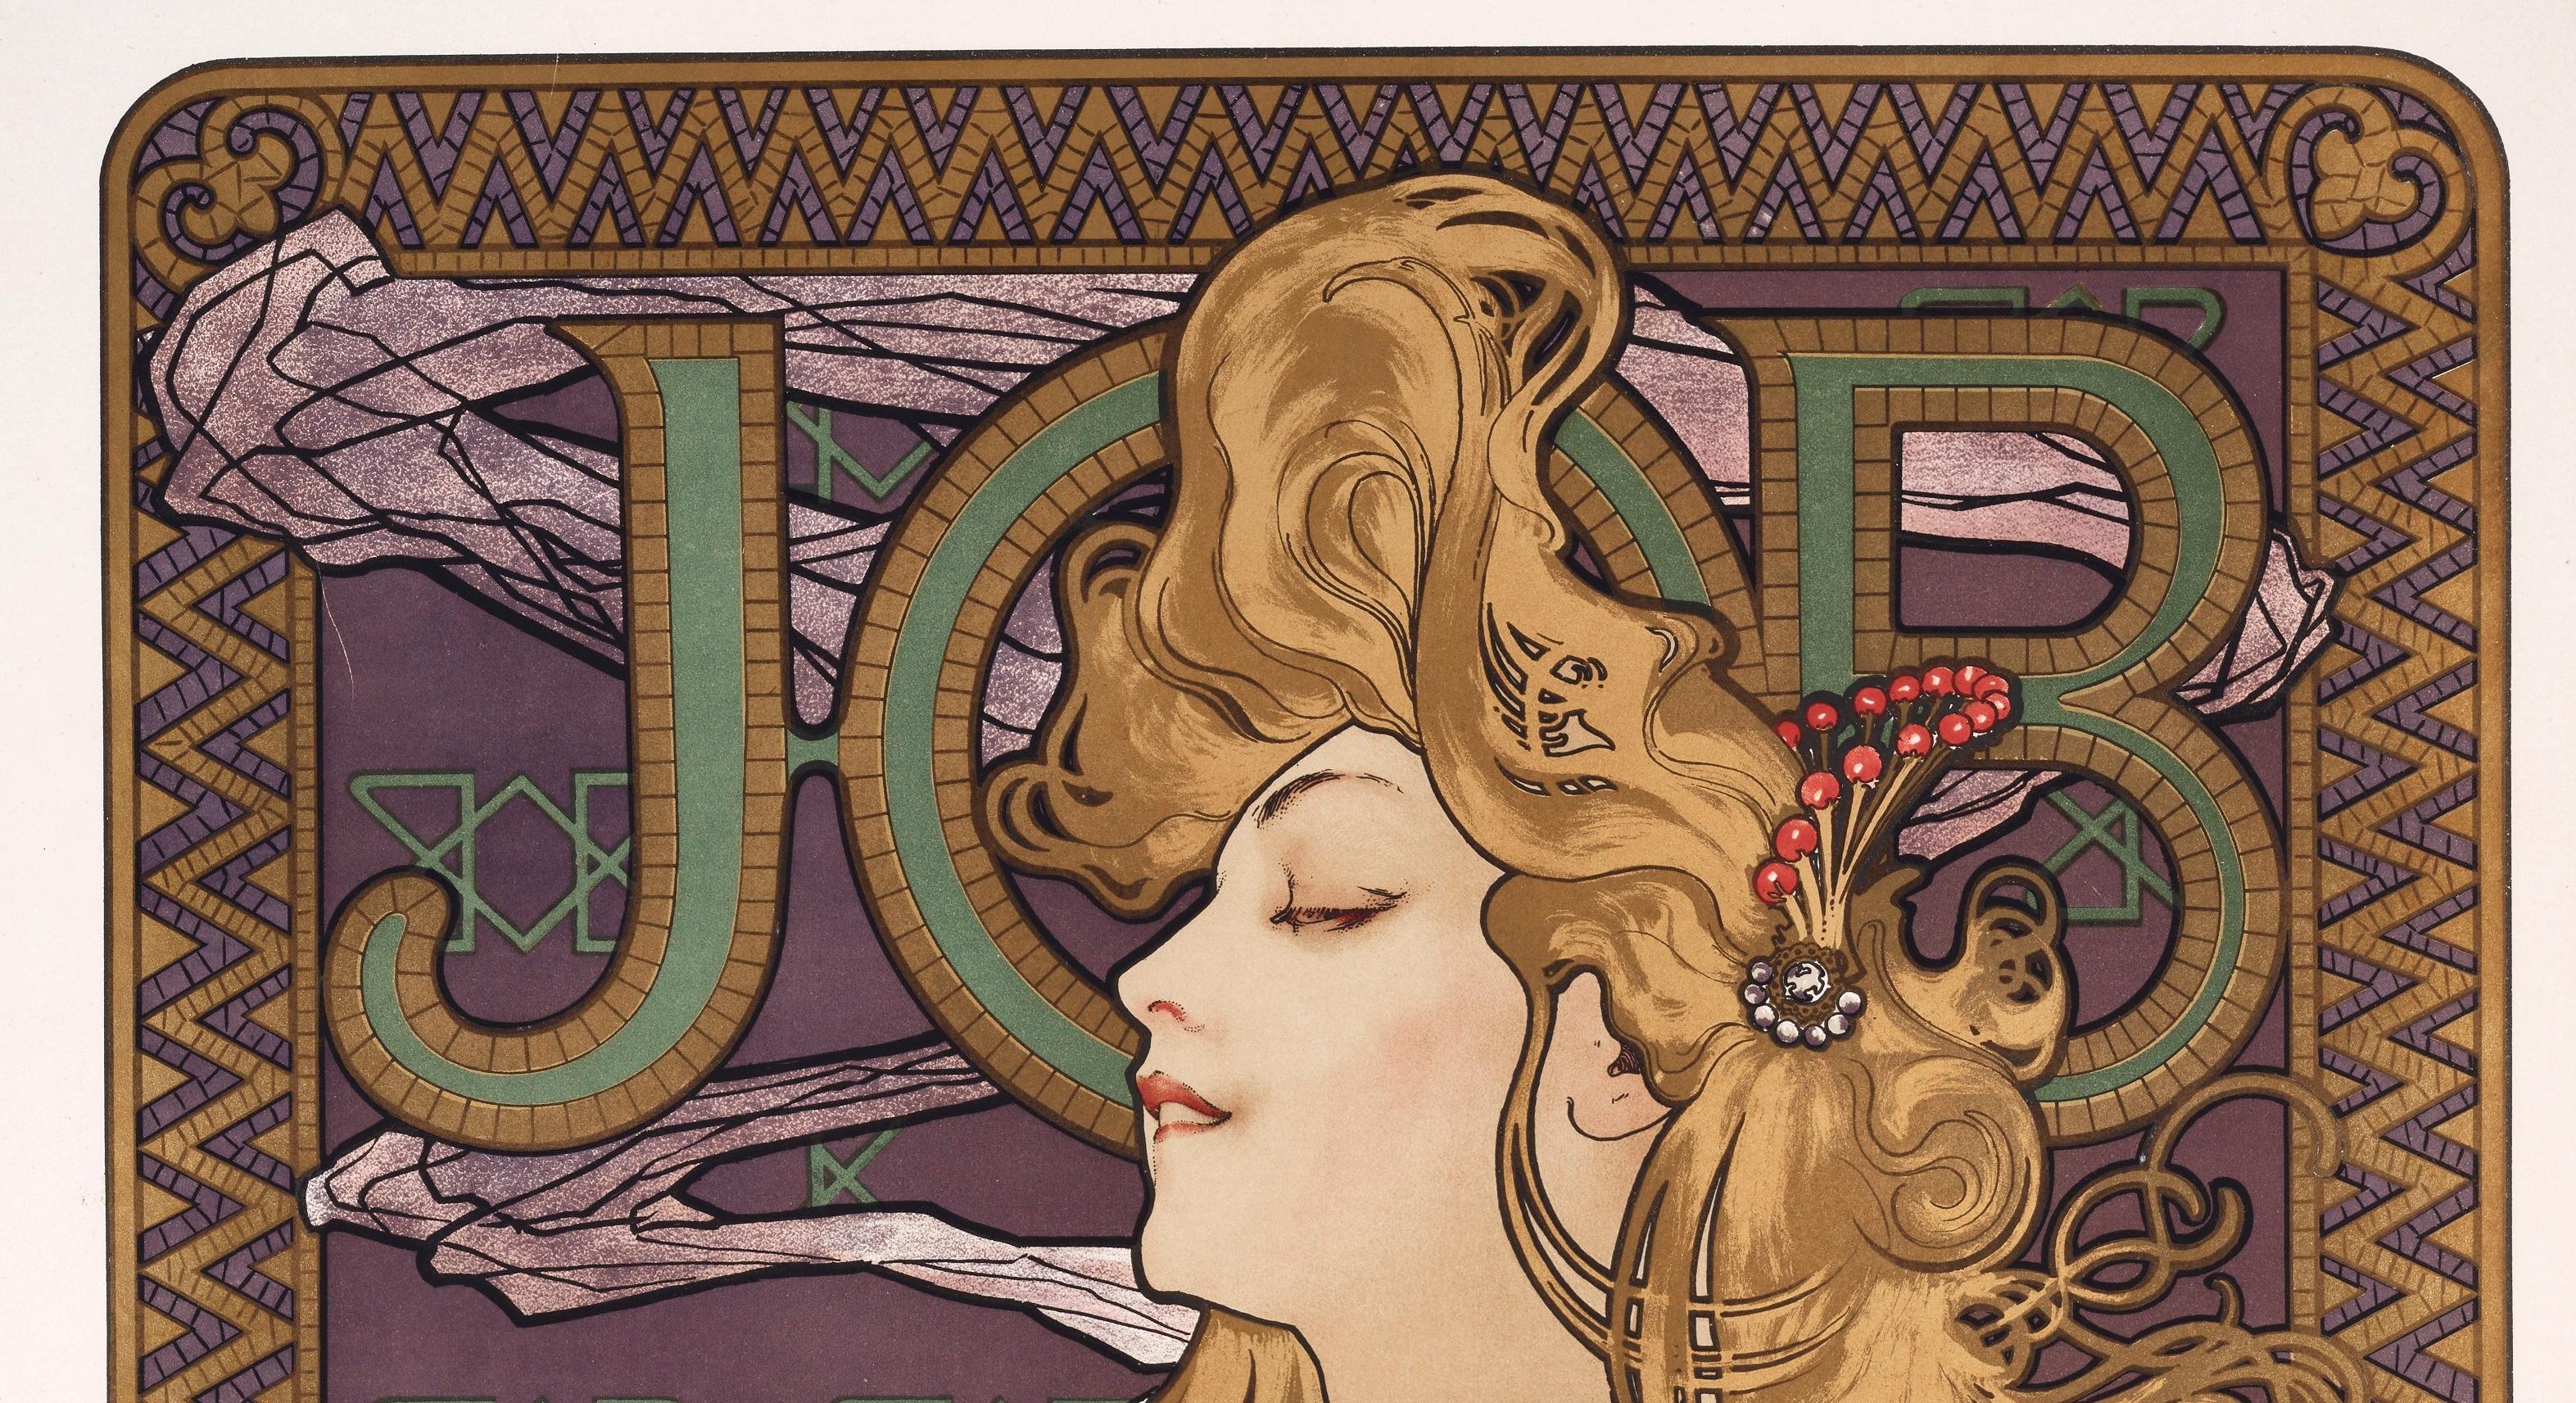 Original Art Nouveau Vintage Poster dating from 1896 by Alphonse Mucha for Job, Cigarette paper.

Artist: Alphonse Mucha (1860-1939)
Title: Job
Date: 1896
Size (w x h): 18.3 x 26.3 in / 46.4 x 66.7 cm
Printer: F. Champenois, Paris.
Materials